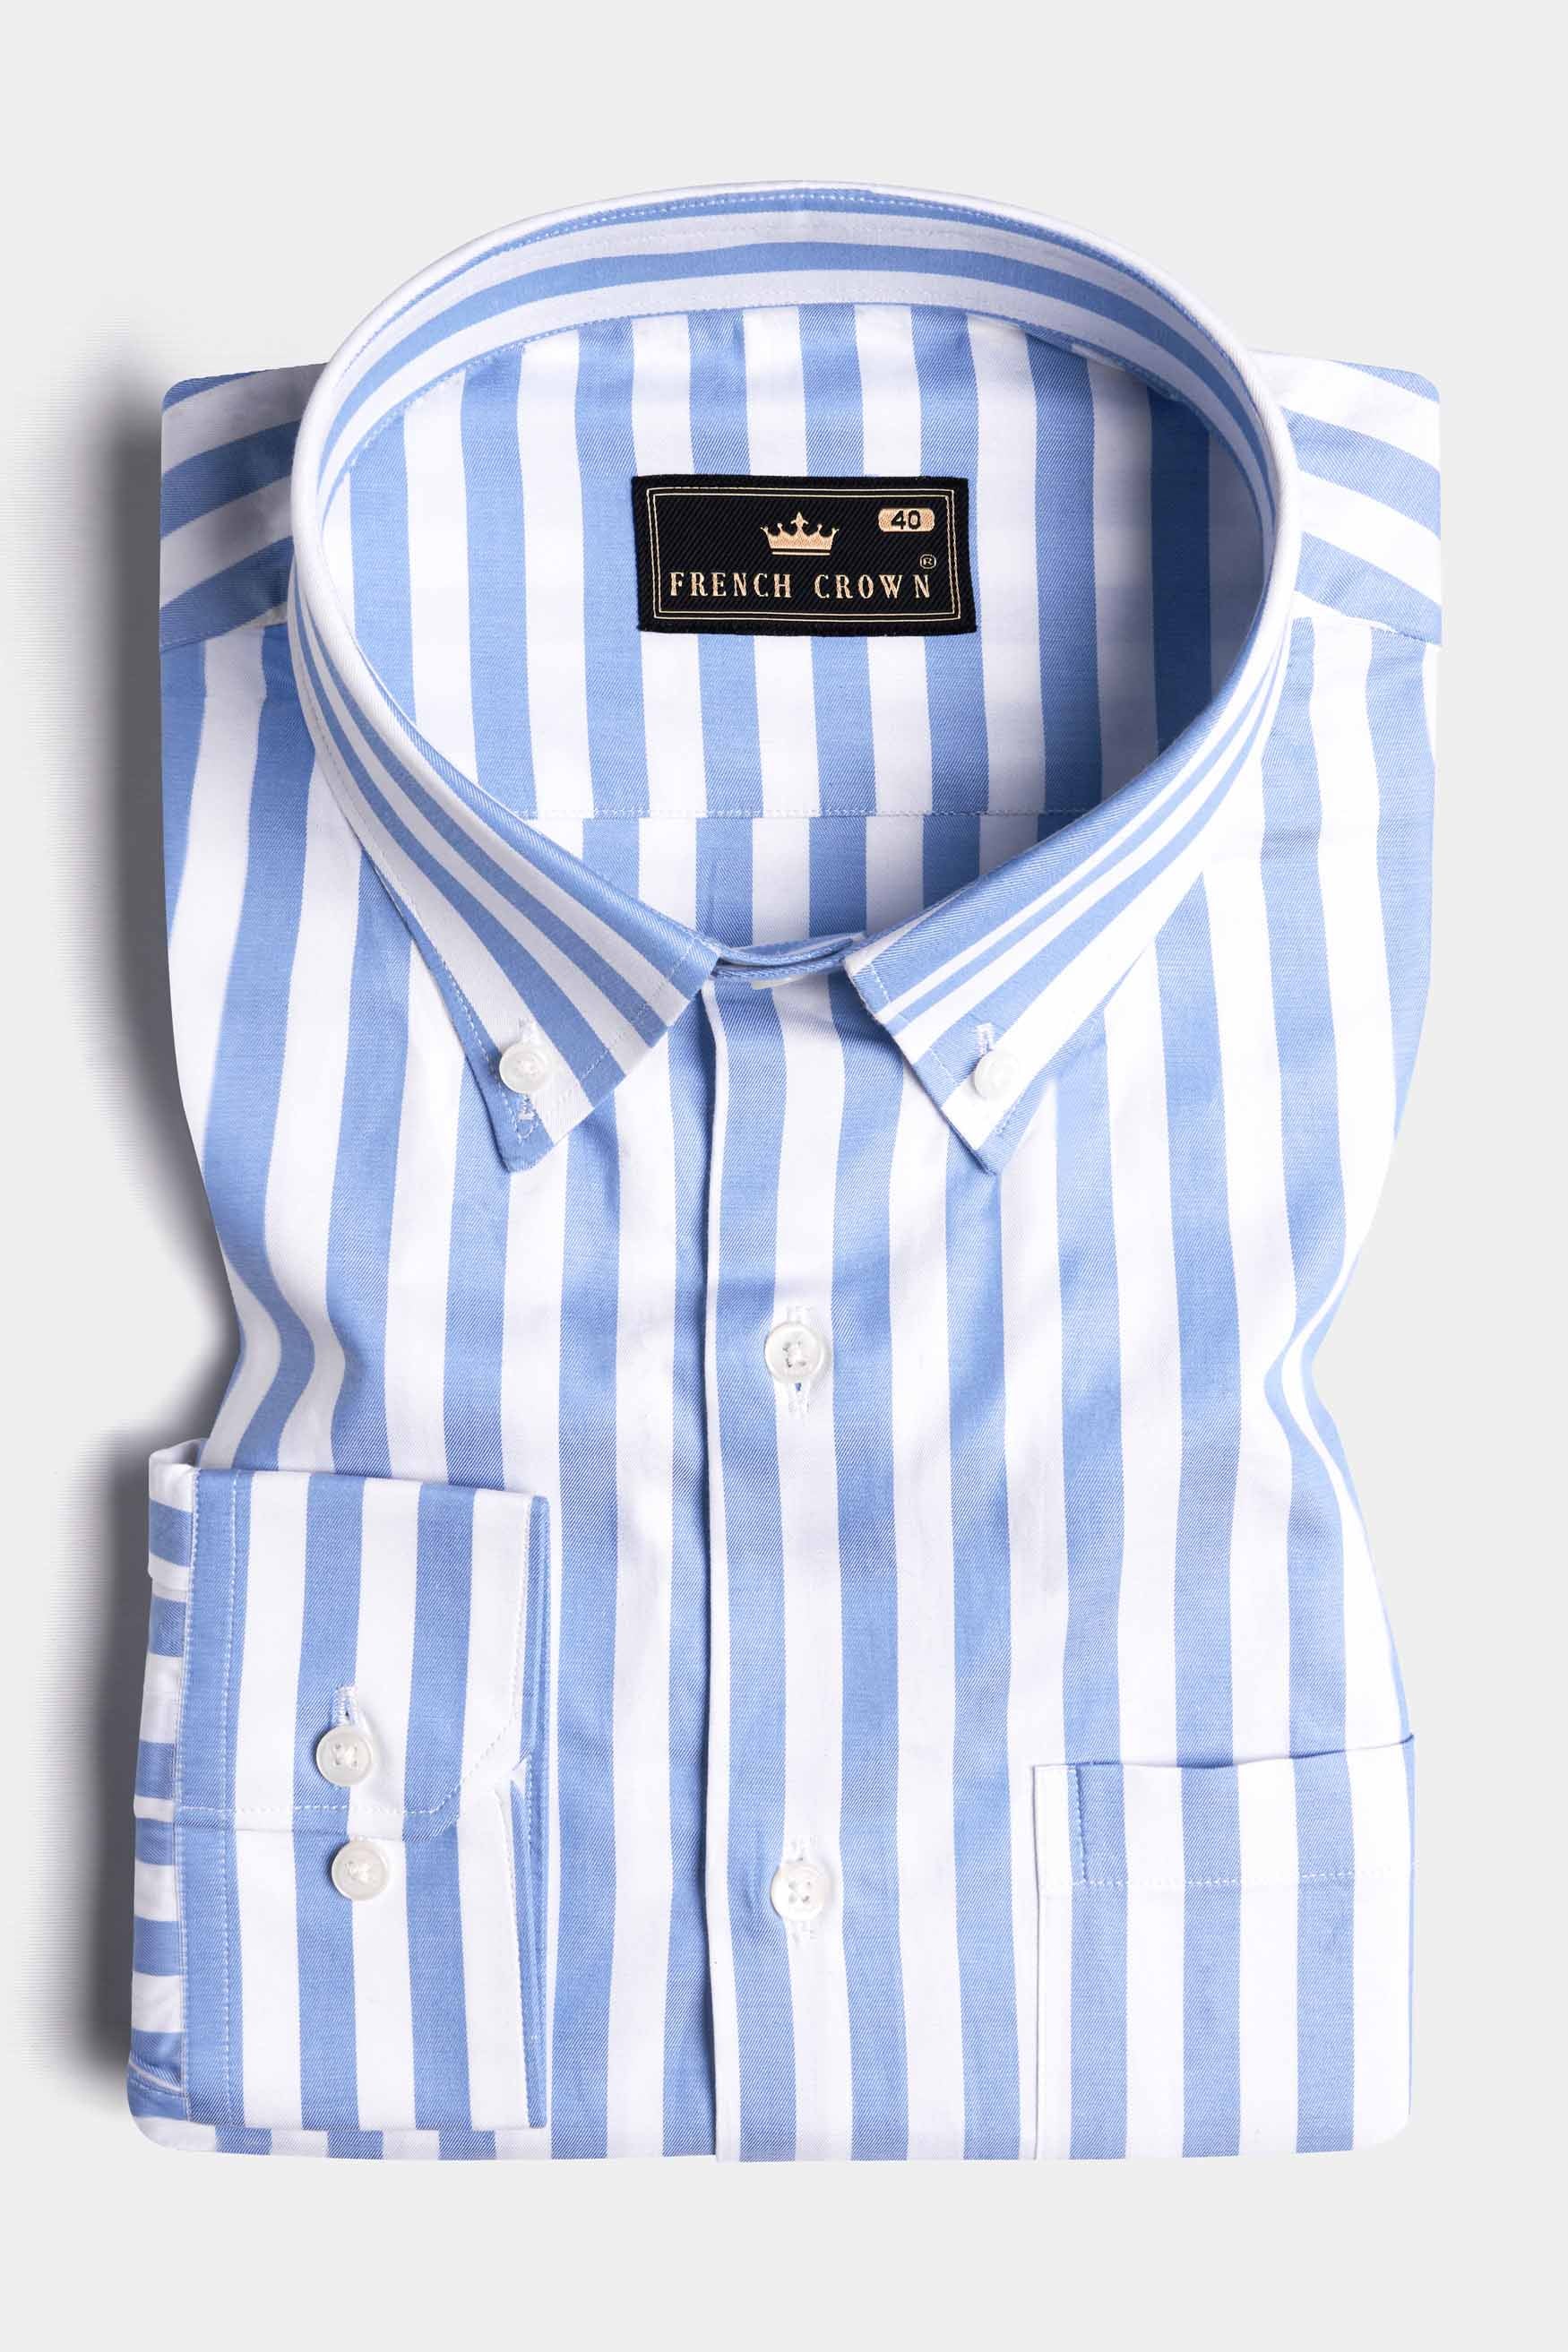 Bright White with Alaskan Blue Striped Twill Premium Cotton Shirt